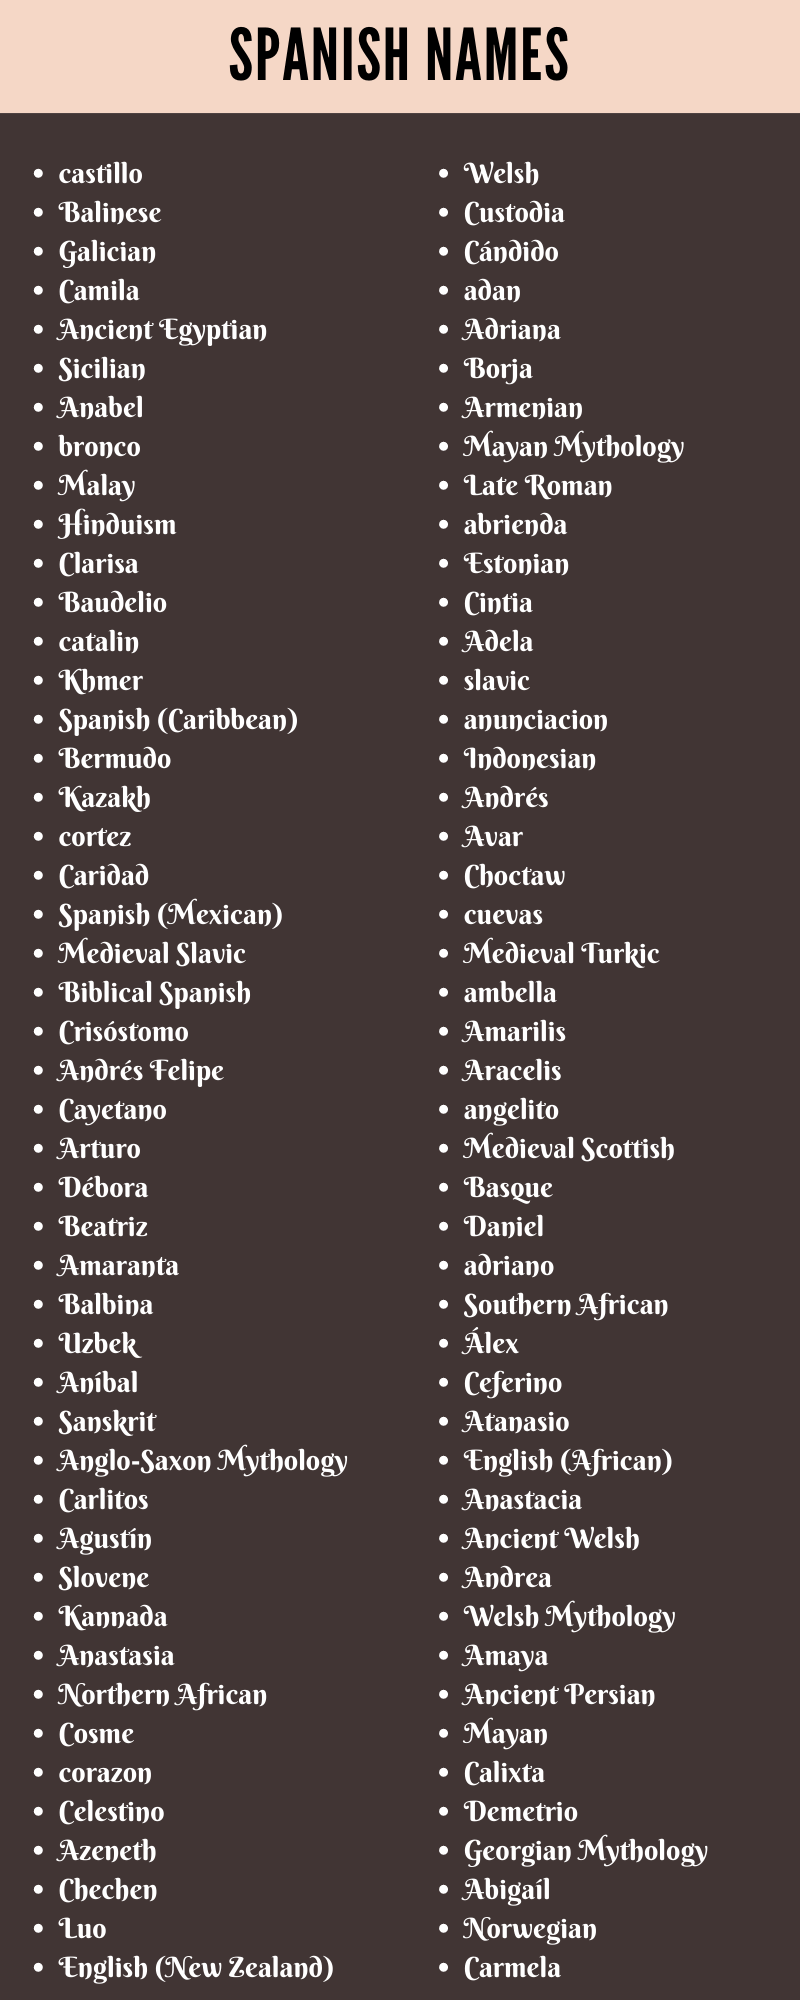 Spanish Names